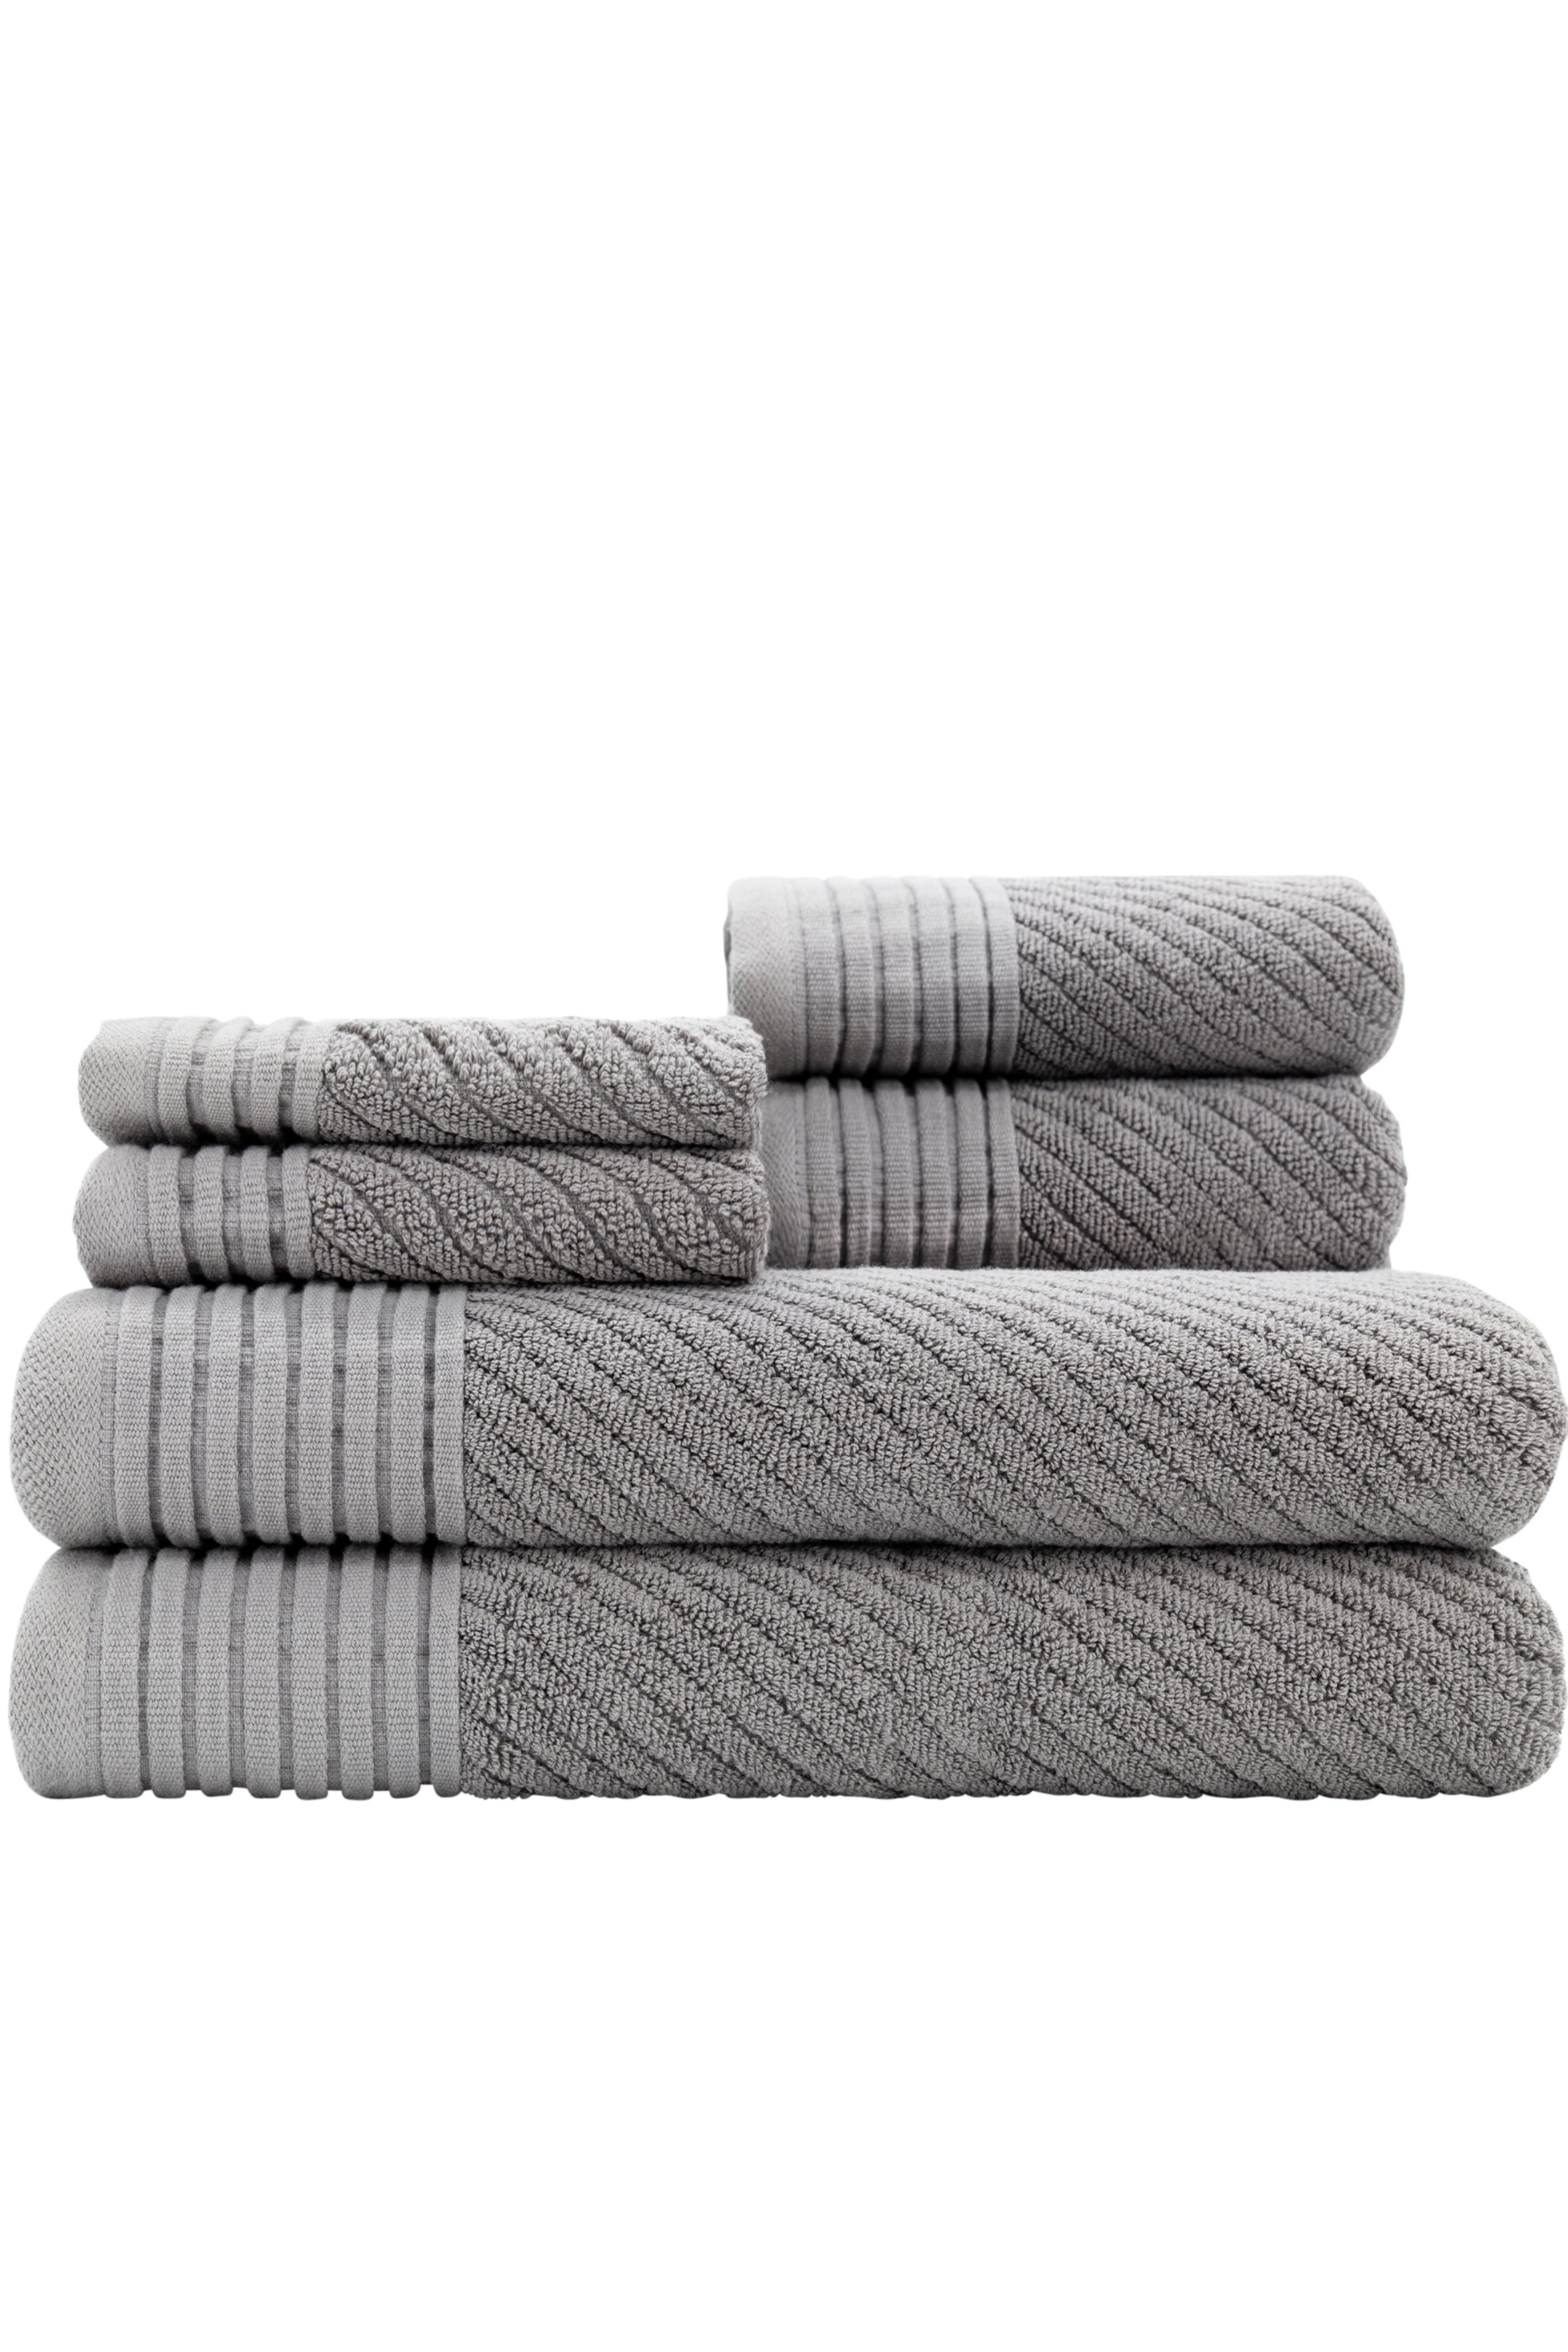 Birds and Nature Grey Color: Blue Caro Home 100% Cotton One Bath Towel 